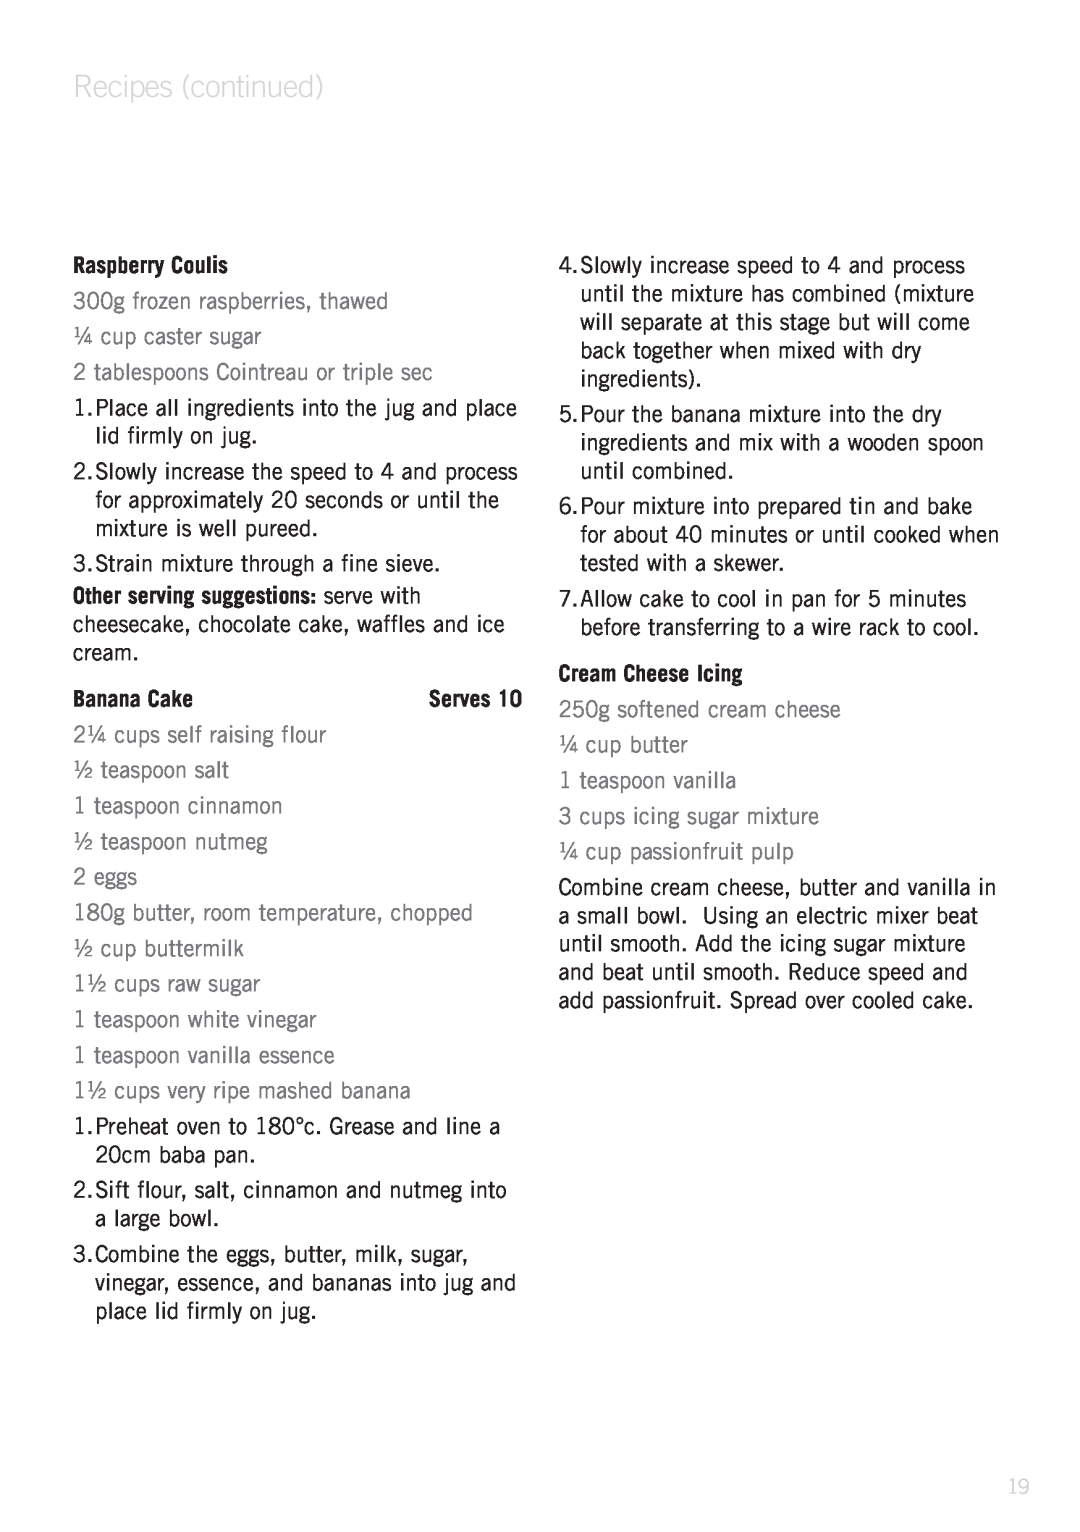 Sunbeam PB9500 manual Raspberry Coulis, Banana Cake, Cream Cheese Icing, Recipes continued 